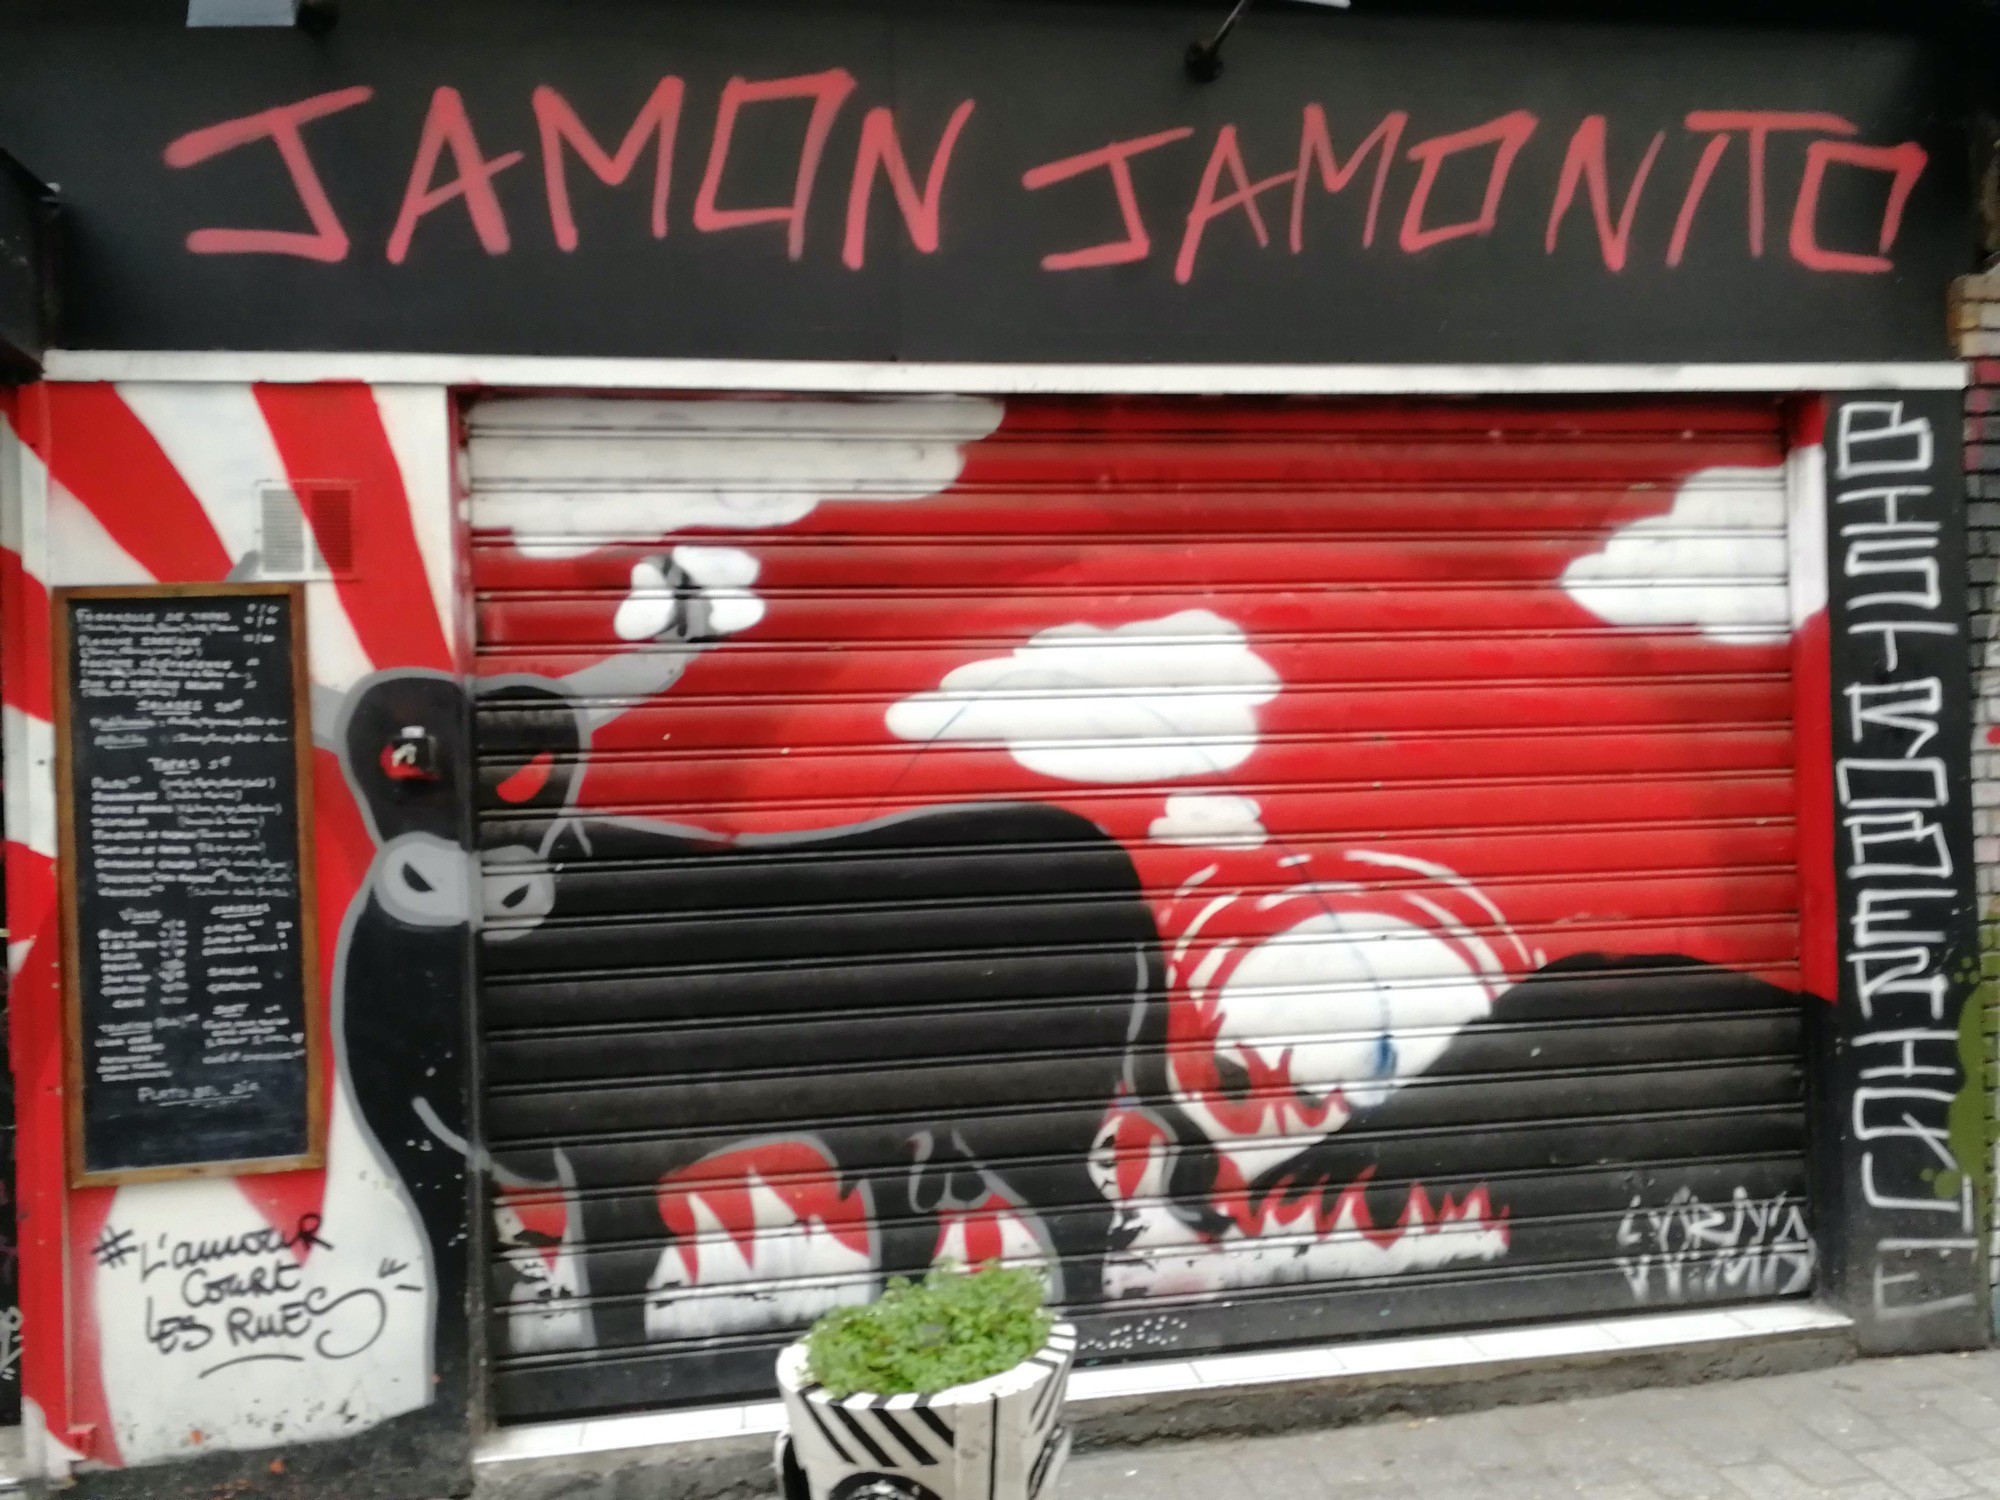 Graffiti 615 Jamon jamonito captured by Rabot in Paris France